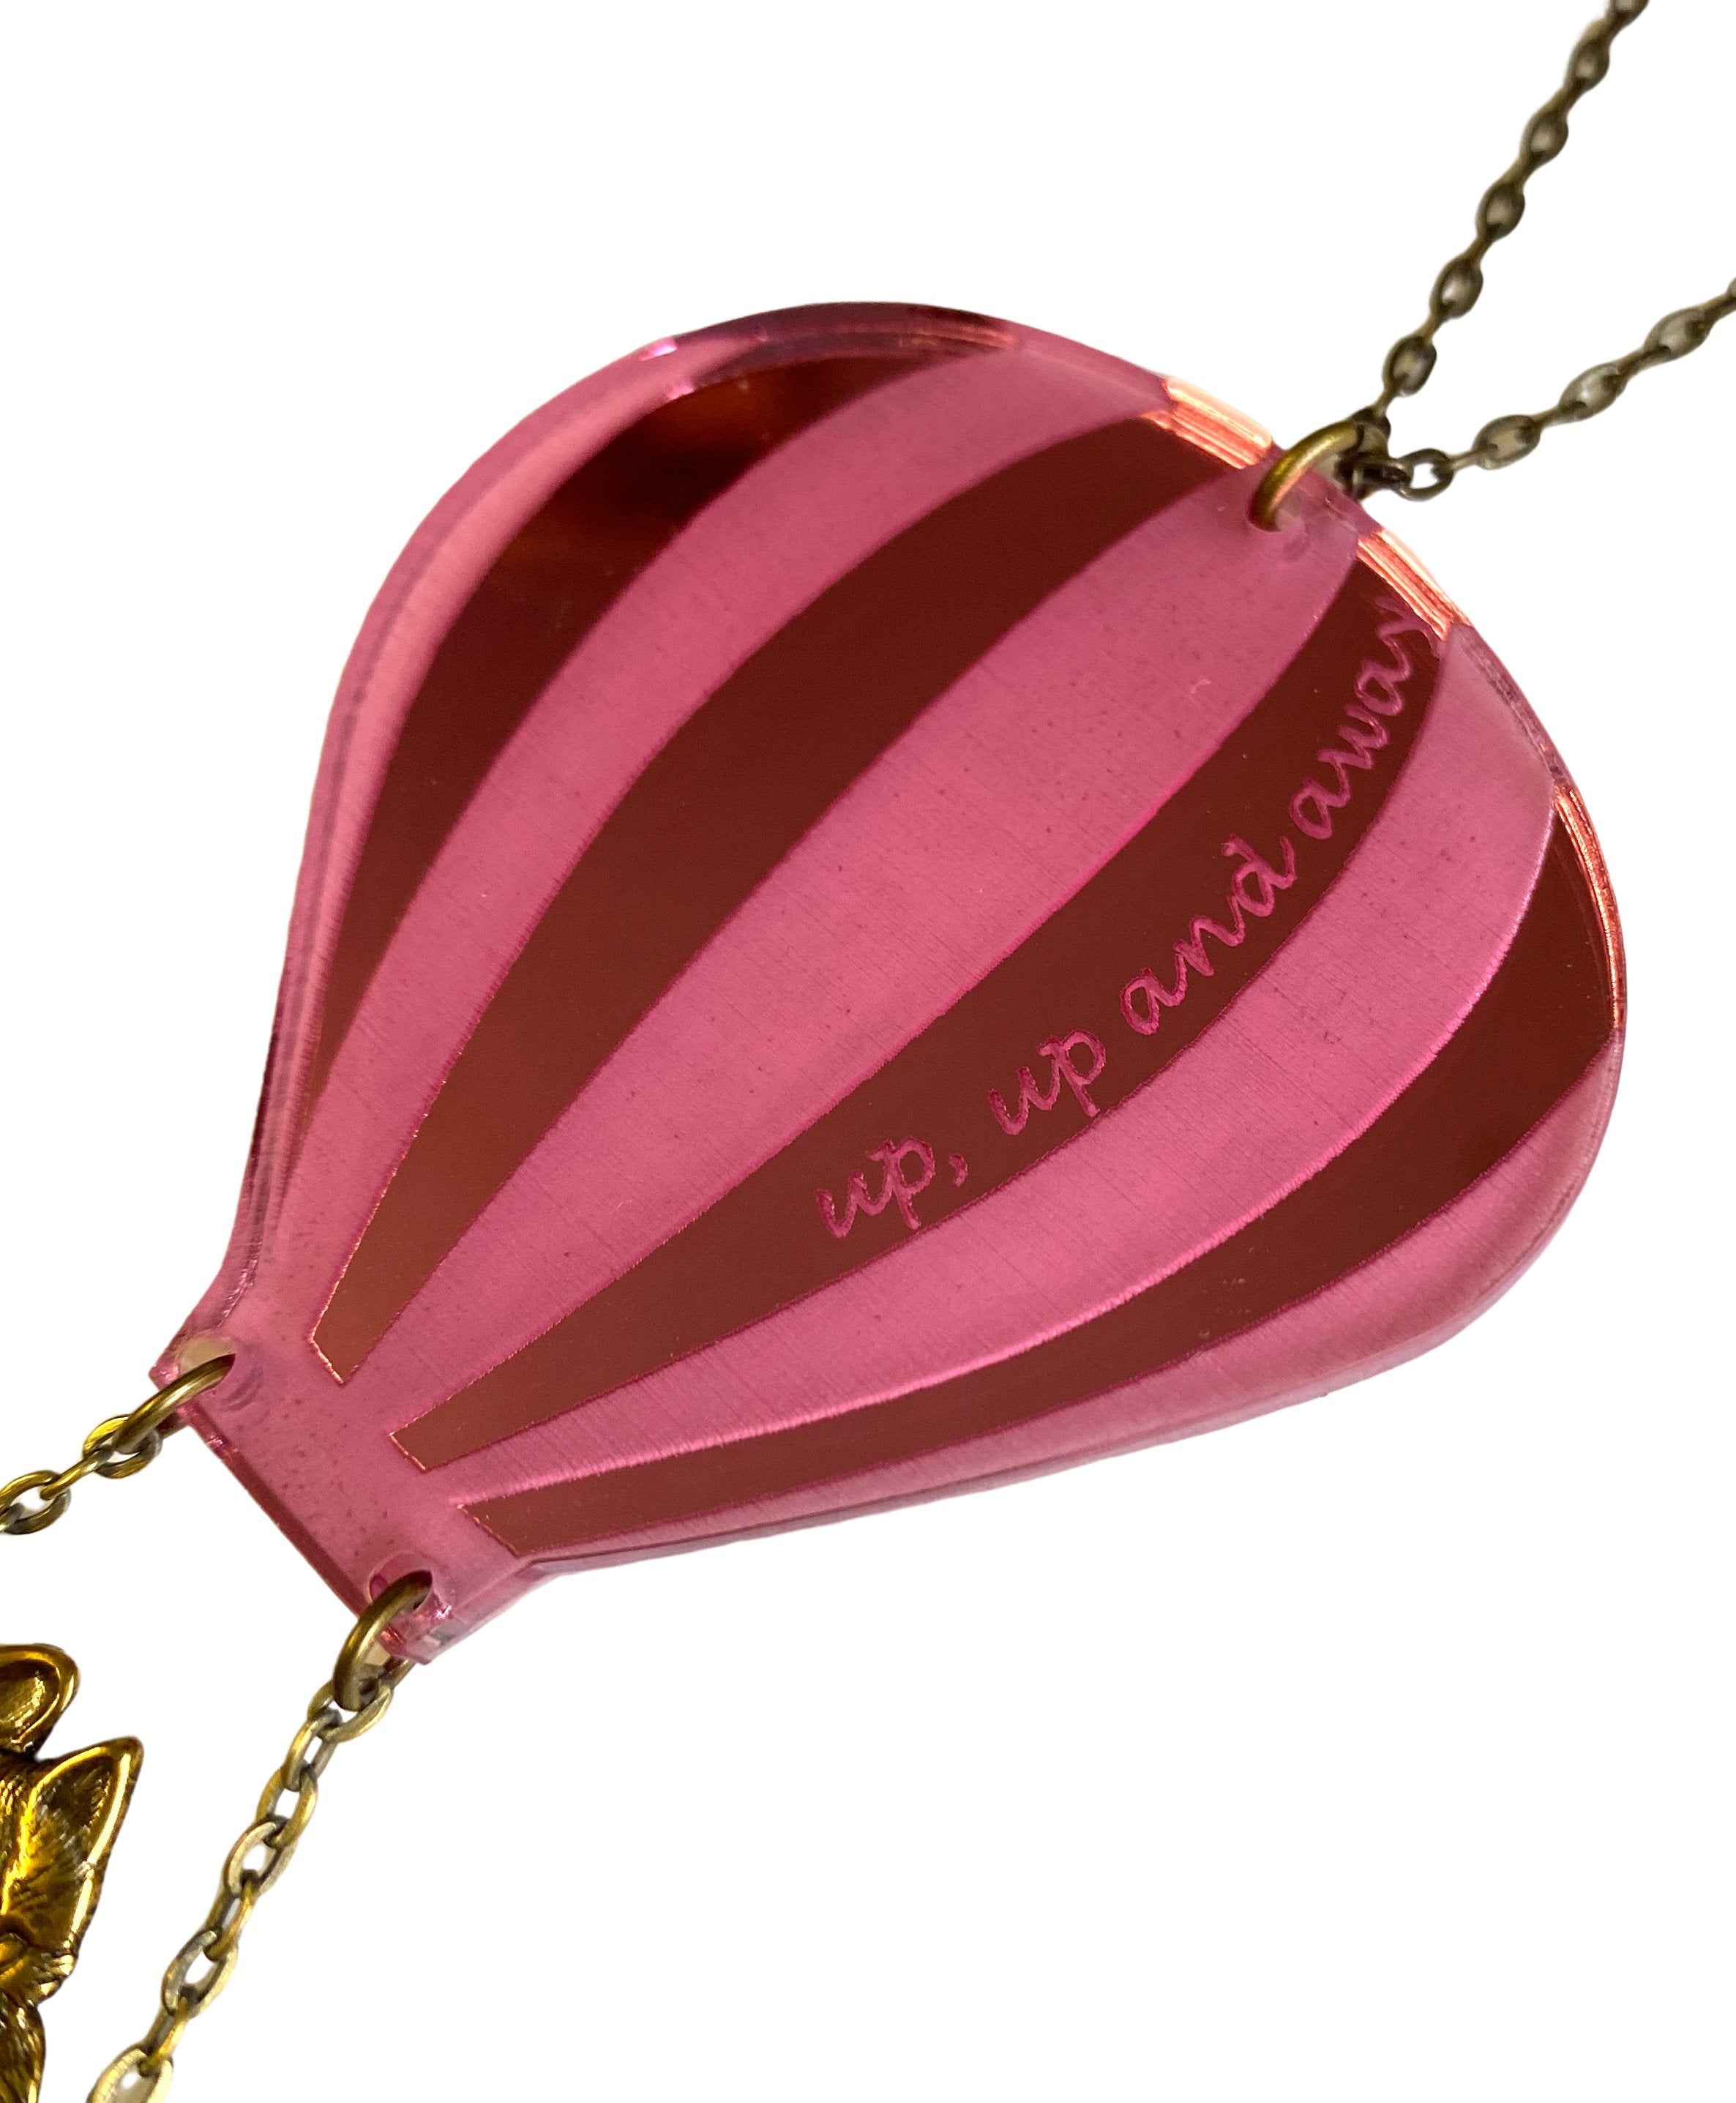 Hot Air Balloon Spherical Shape Magnetic Buckle Bag Handbag Purse Leather  Gifts | eBay